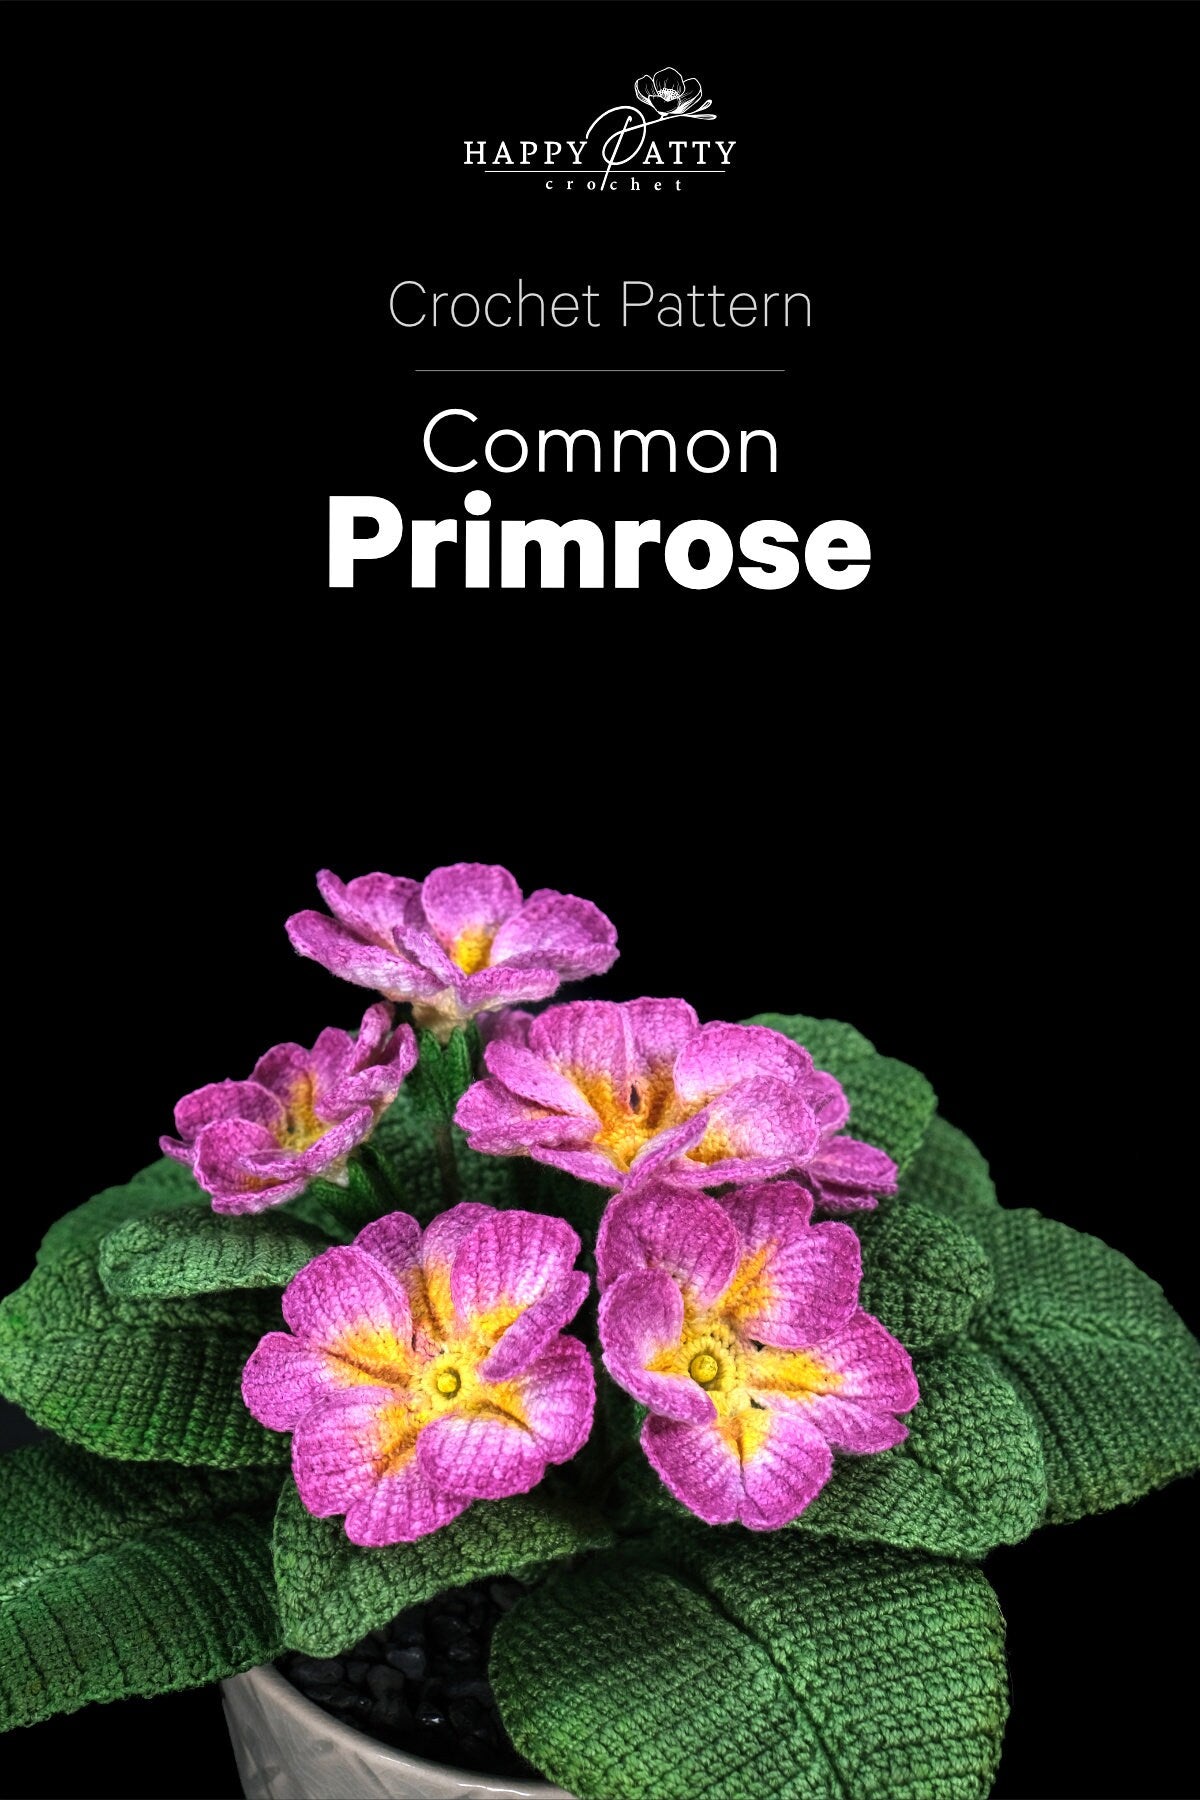 Crochet Primrose Flower Pattern - Crochet Flower Pattern for a Primrose Plant